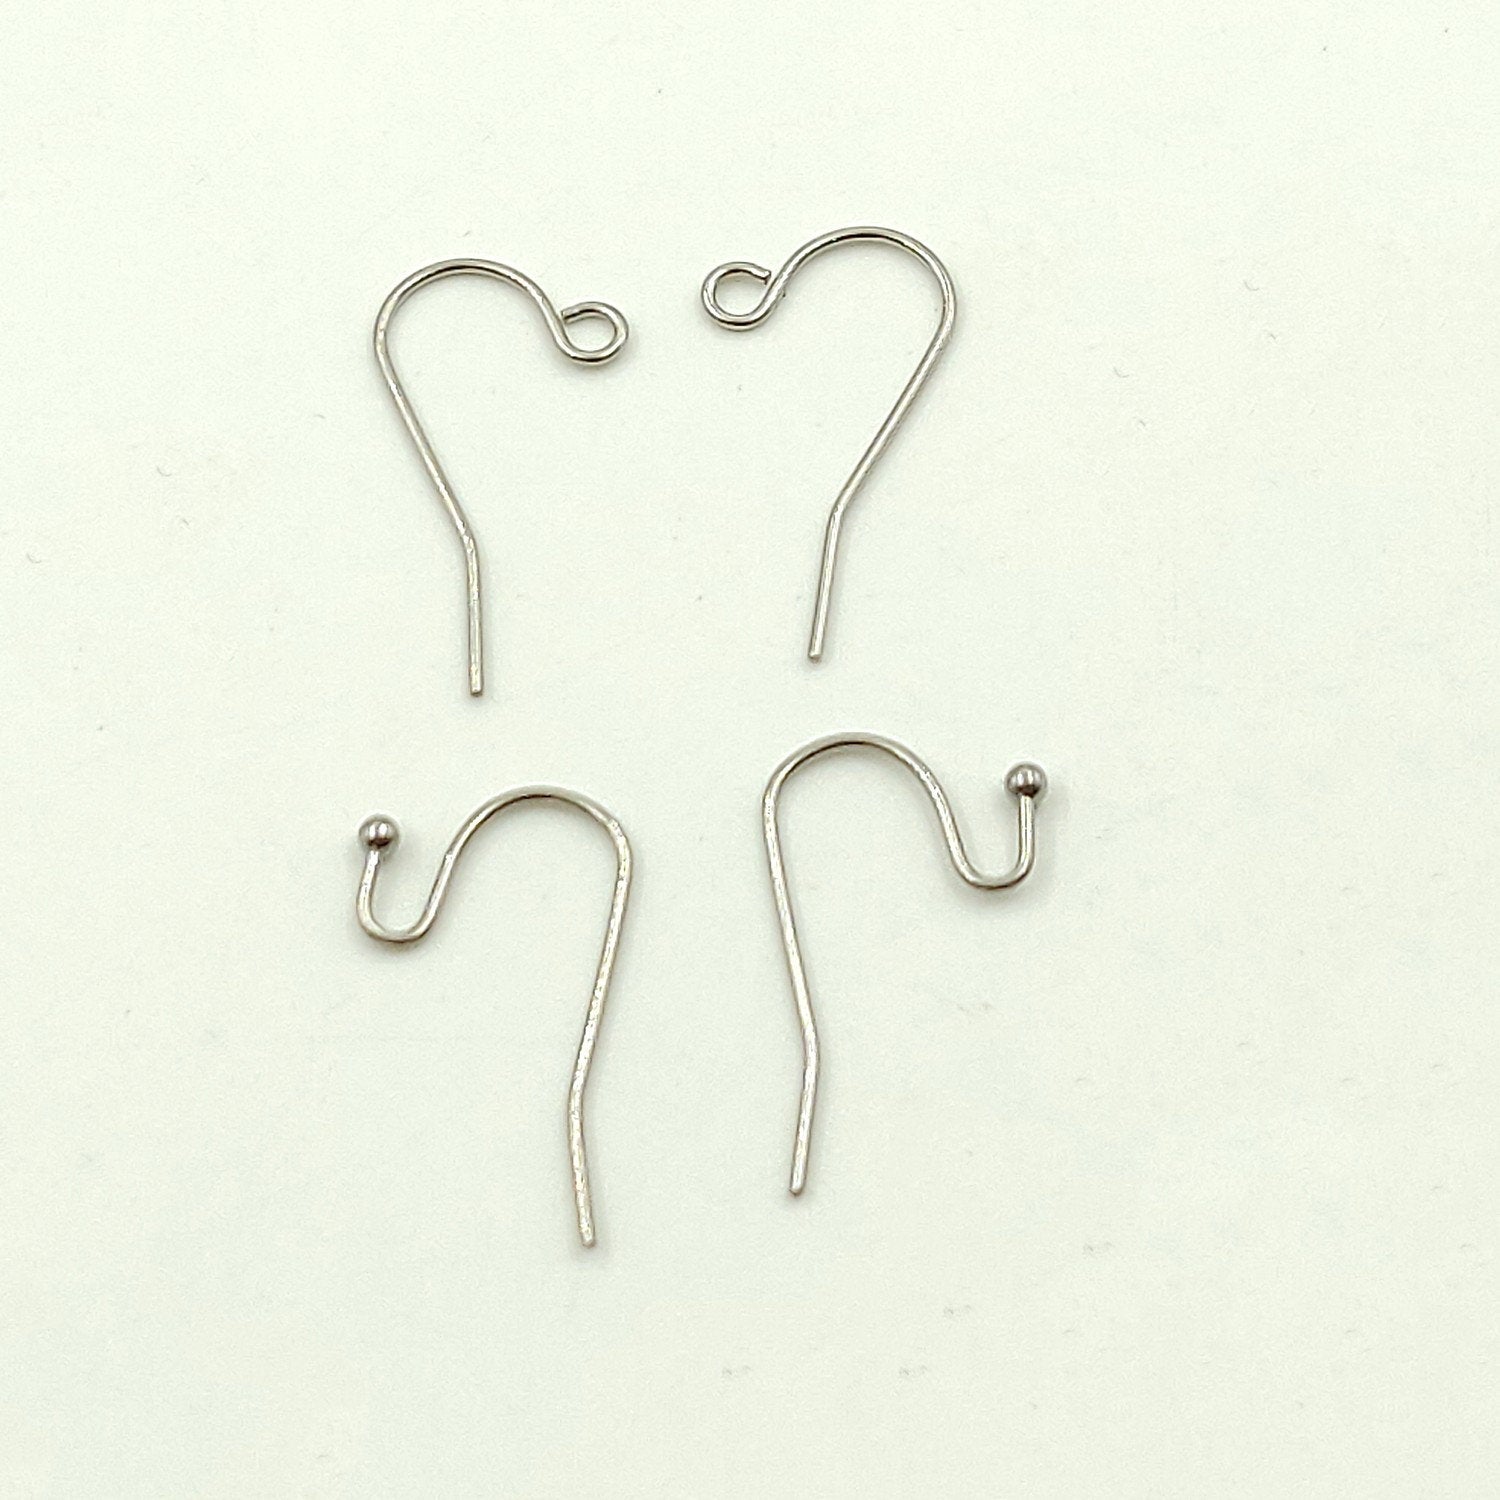 Silver Ear Hooks, Earring Findings Surgical Stainless Steel Earwires, Open Loop Fish Hooks or Ball End Earring Components Bulk Wholesale